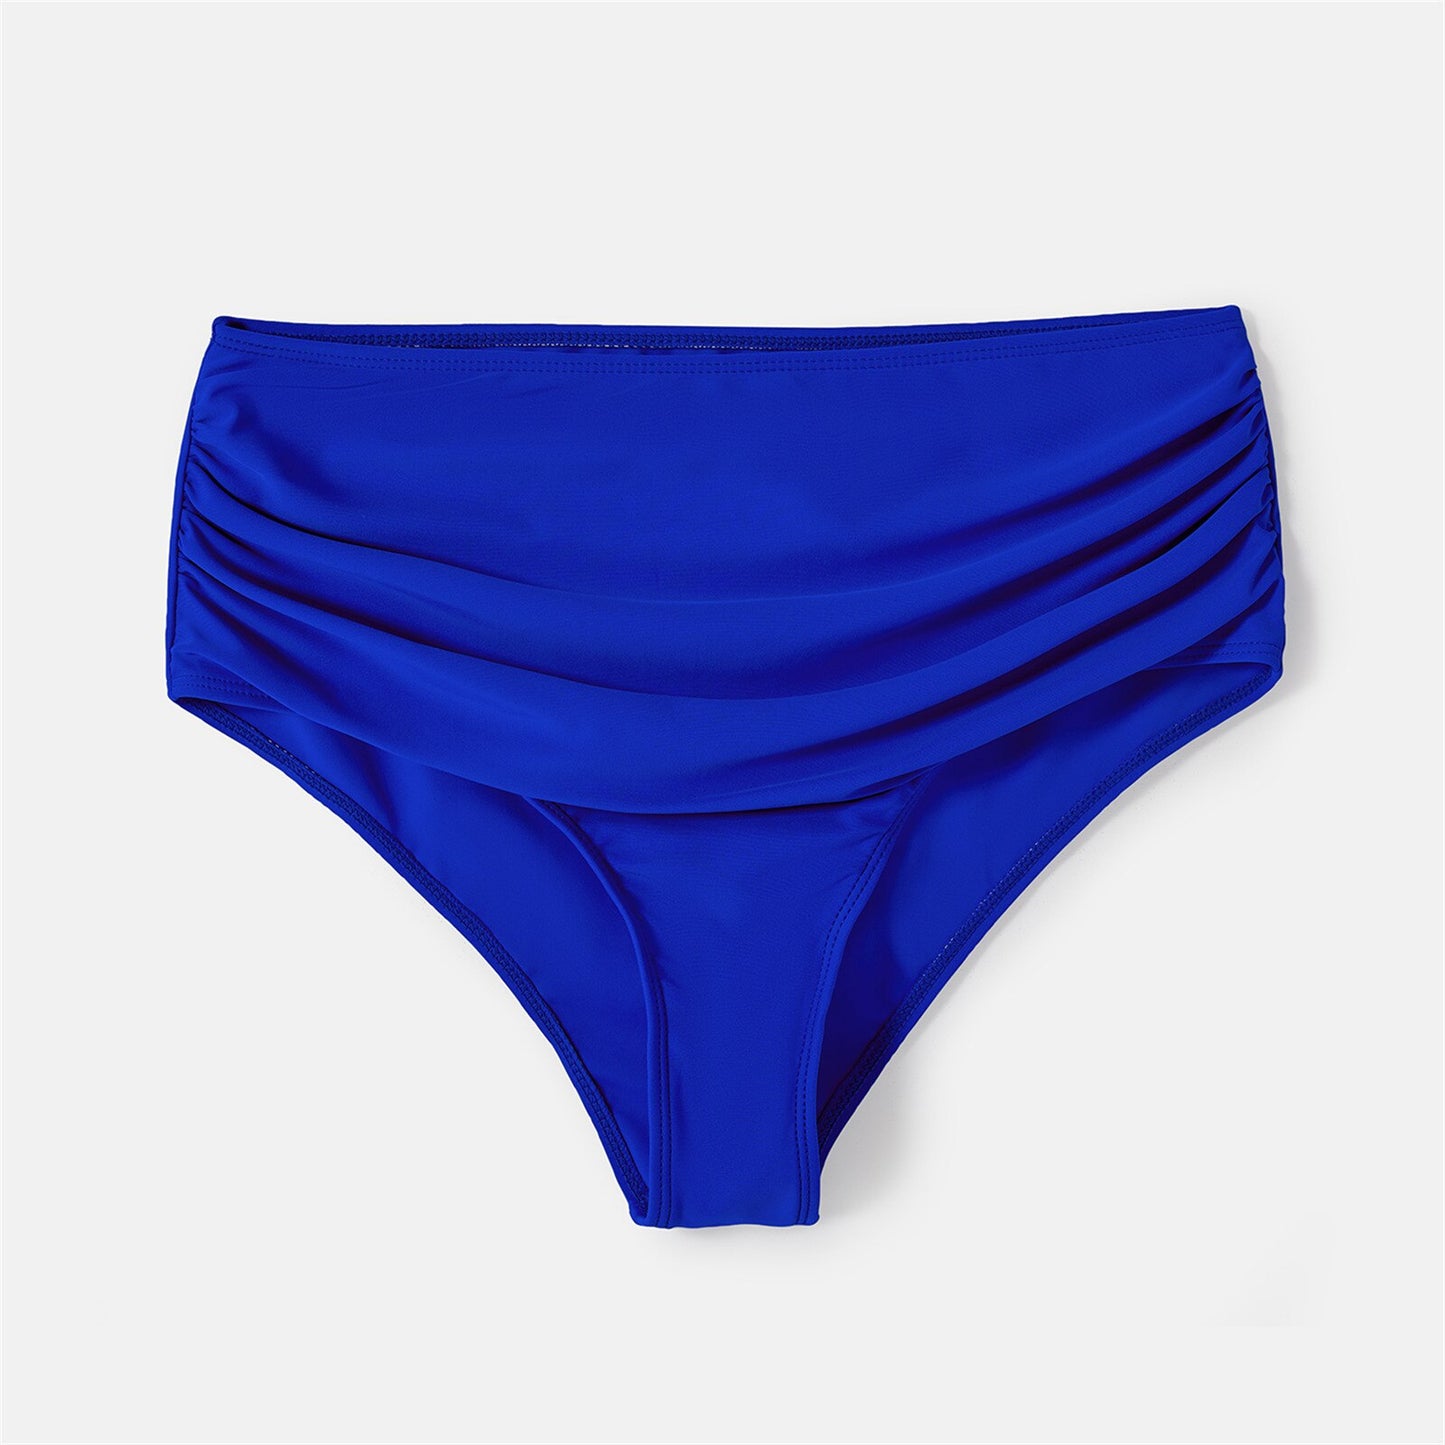 Family Matching! Solid Blue Ruffle Bikini Swimsuits & King/Prince Trunks